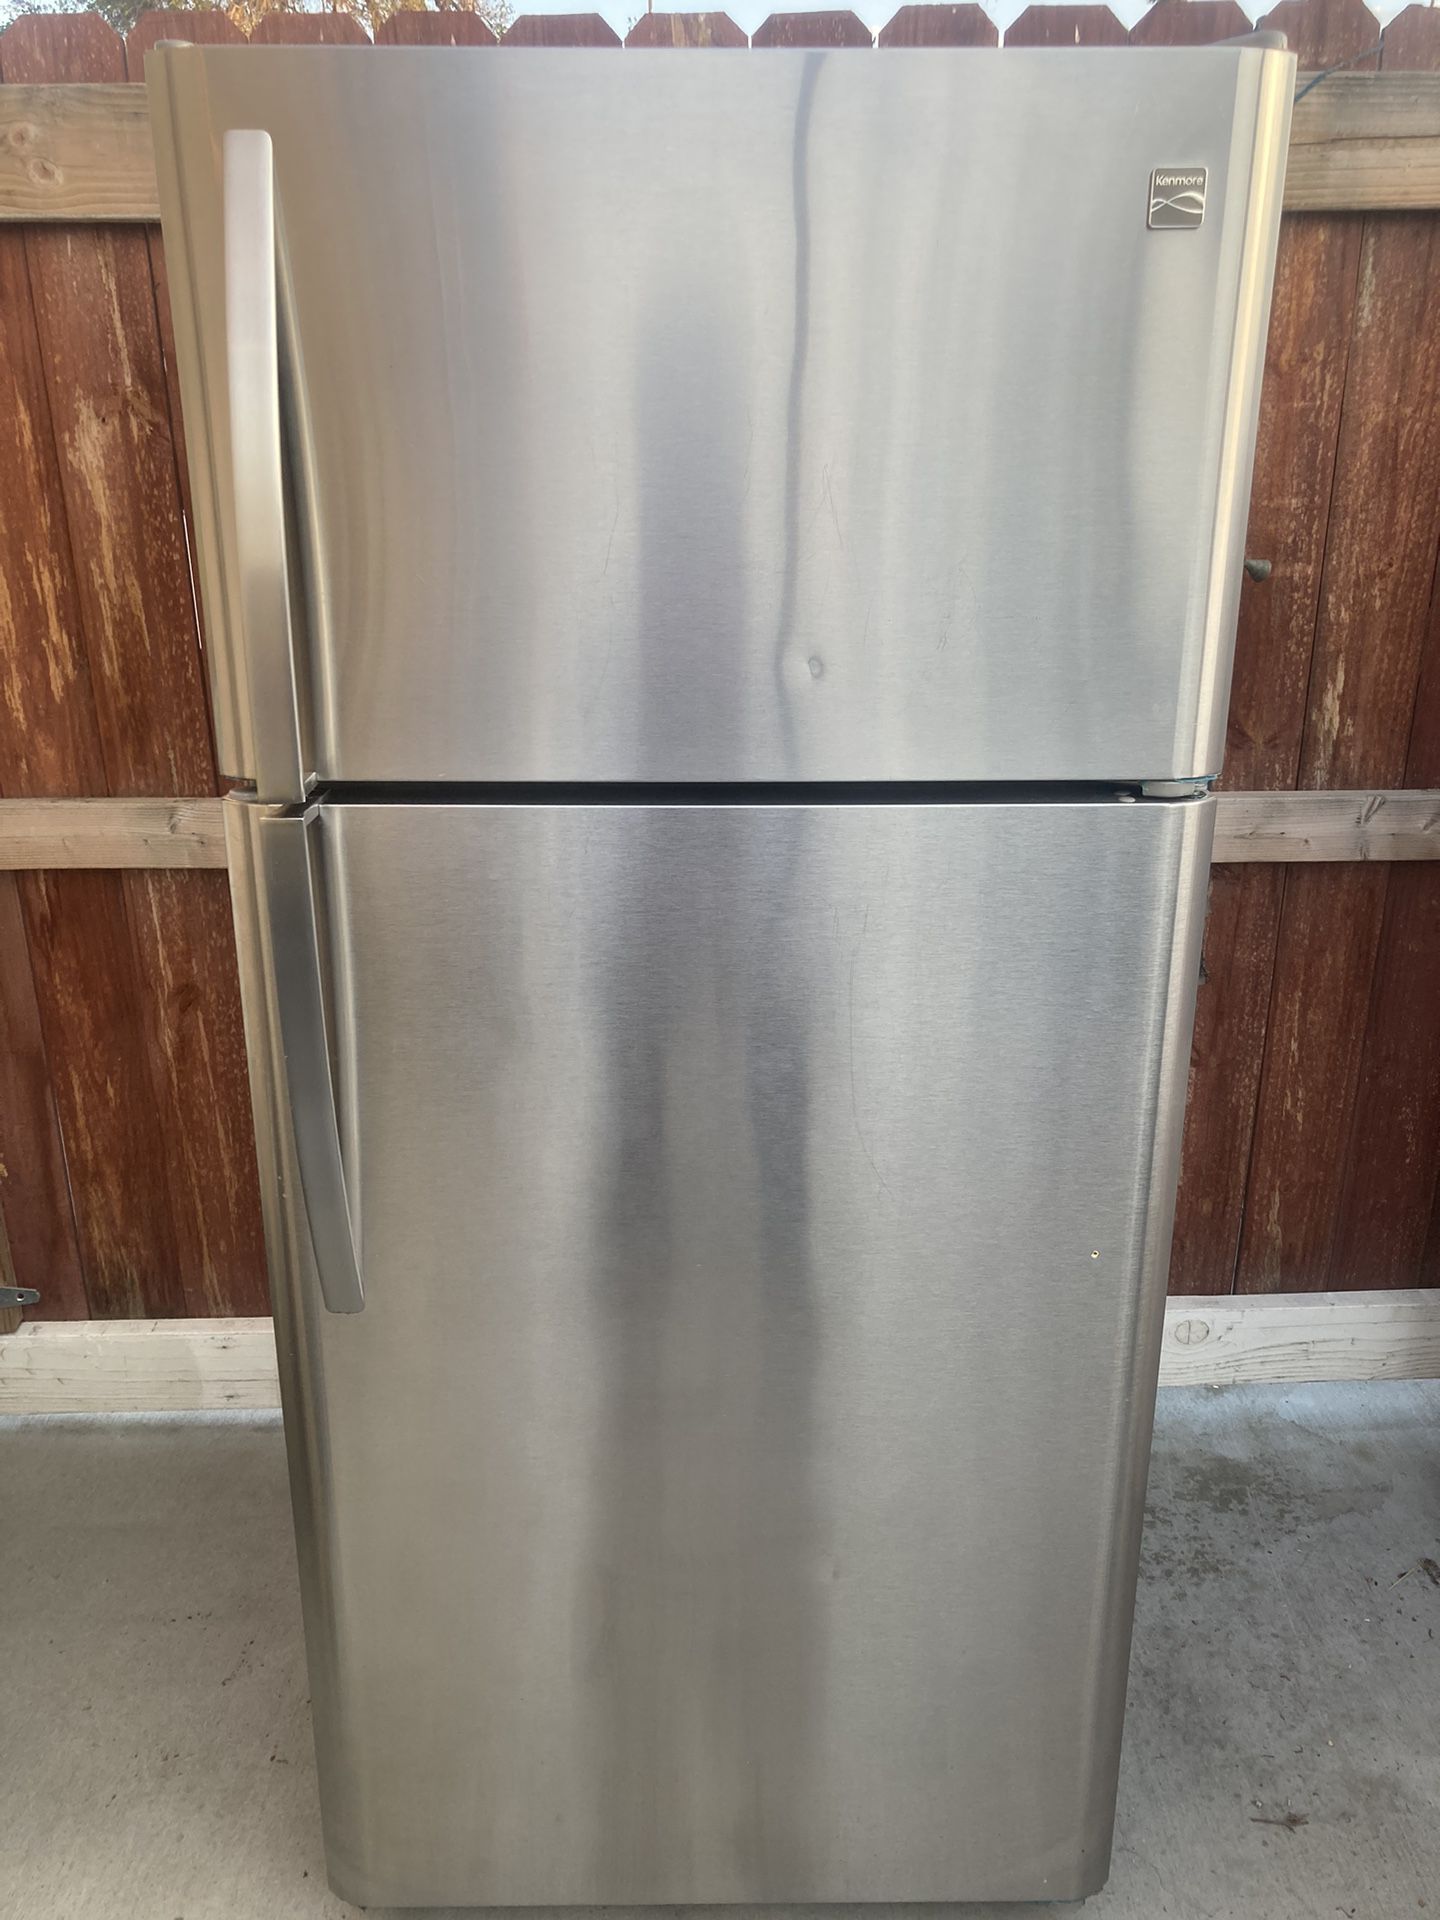 Kenmore Stainless Steel Refrigerator Freezer 